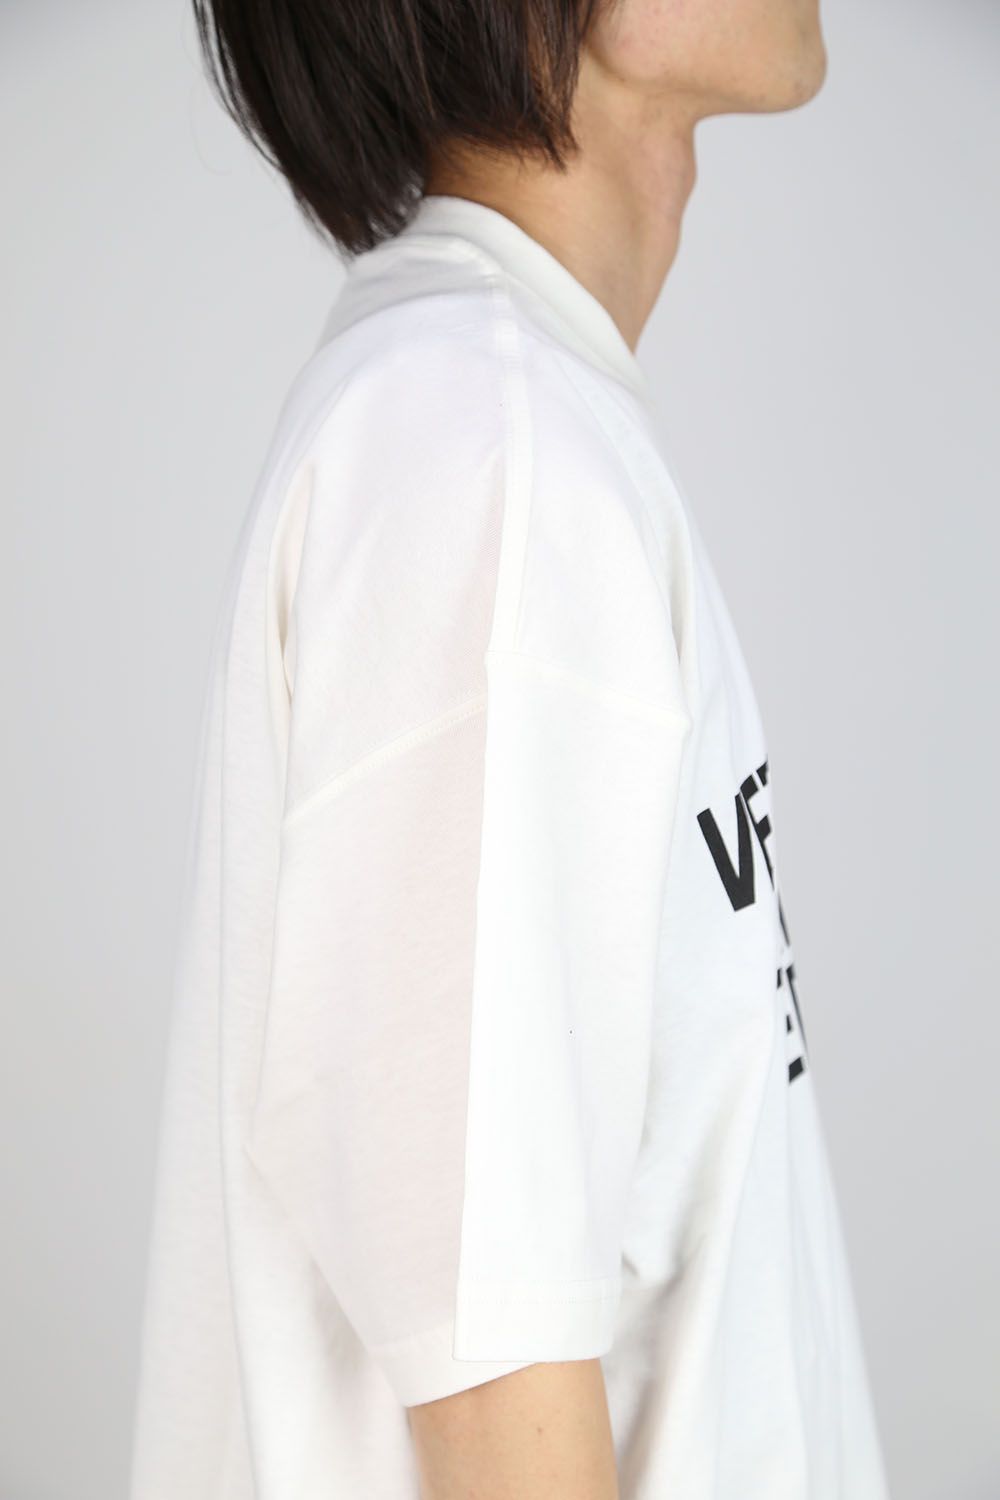 VETEMENTS ヴェトモン 21SS Limited Edition Big Logo Tee リミテッドエディションビッグロゴ 半袖Tシャツカットソー UE51TR810W ホワイト